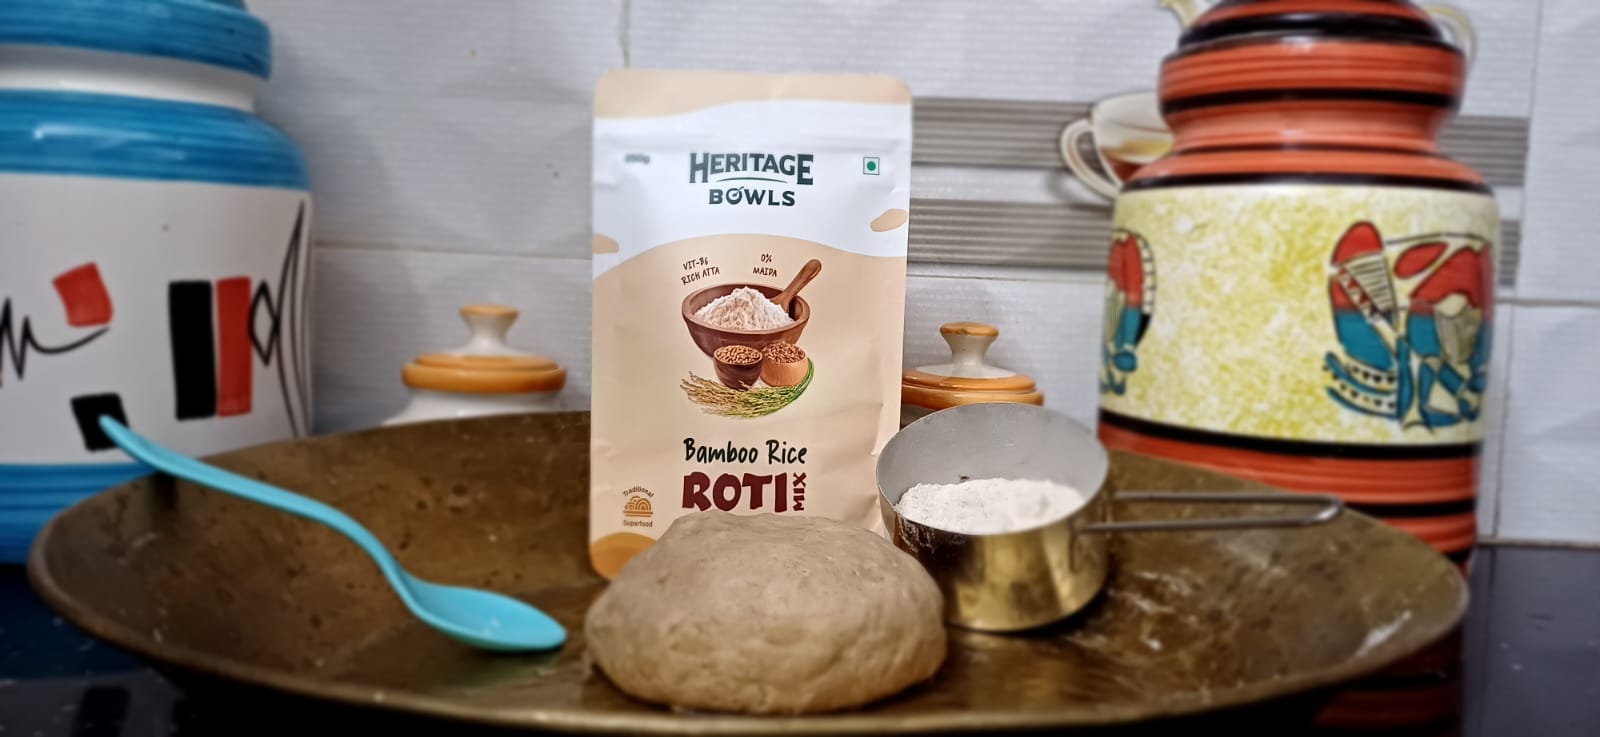 Load video: Making of Pizza using Heritage Bowls&#39; Bamboo Rice Roti Mix